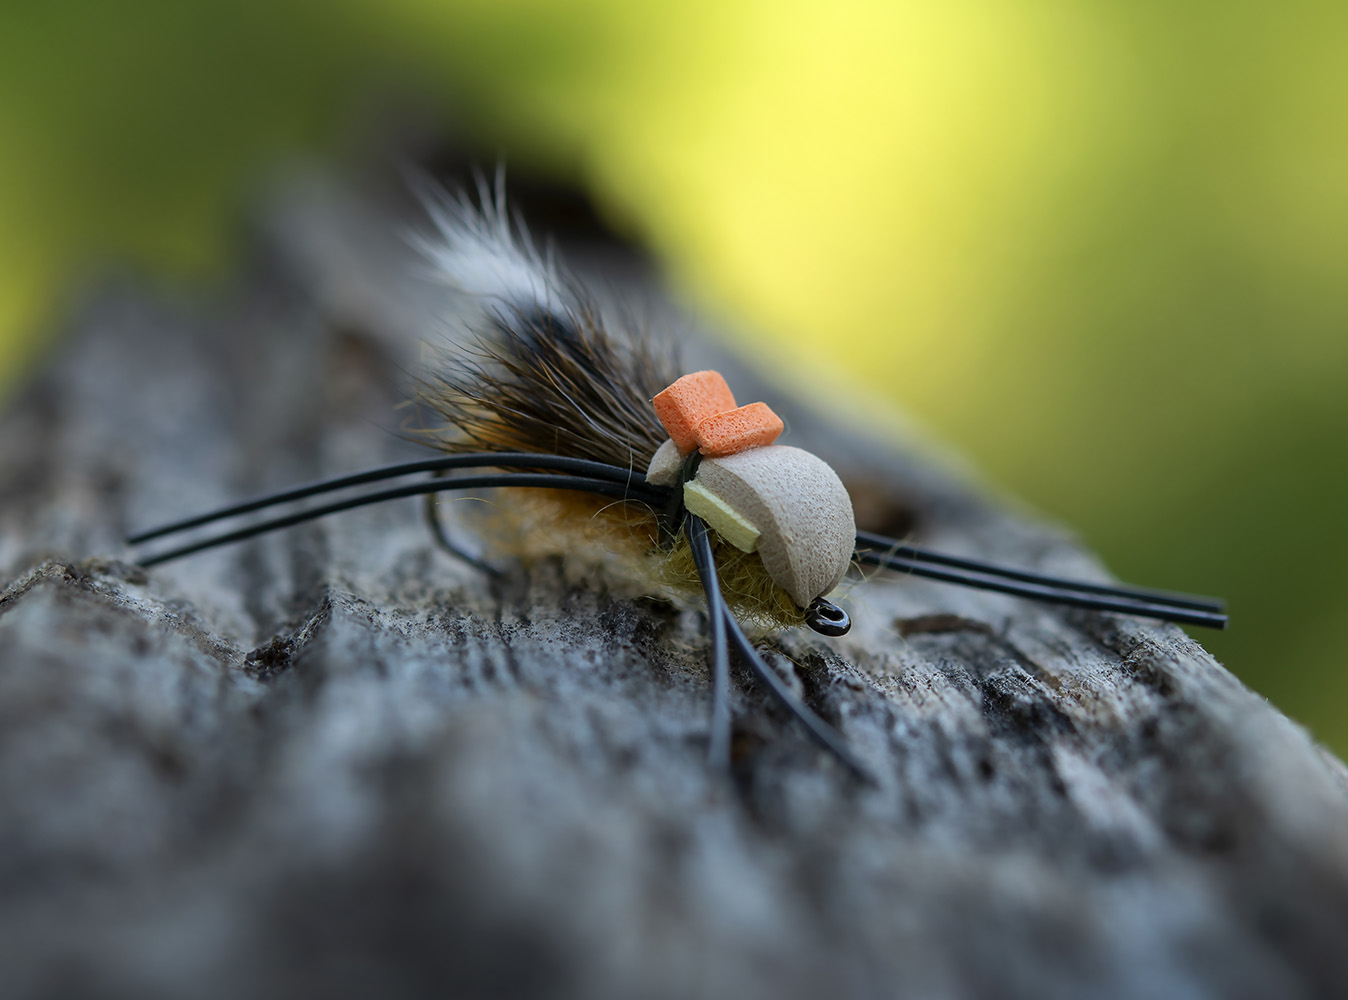 Tan Foam Beetle by Bri-02